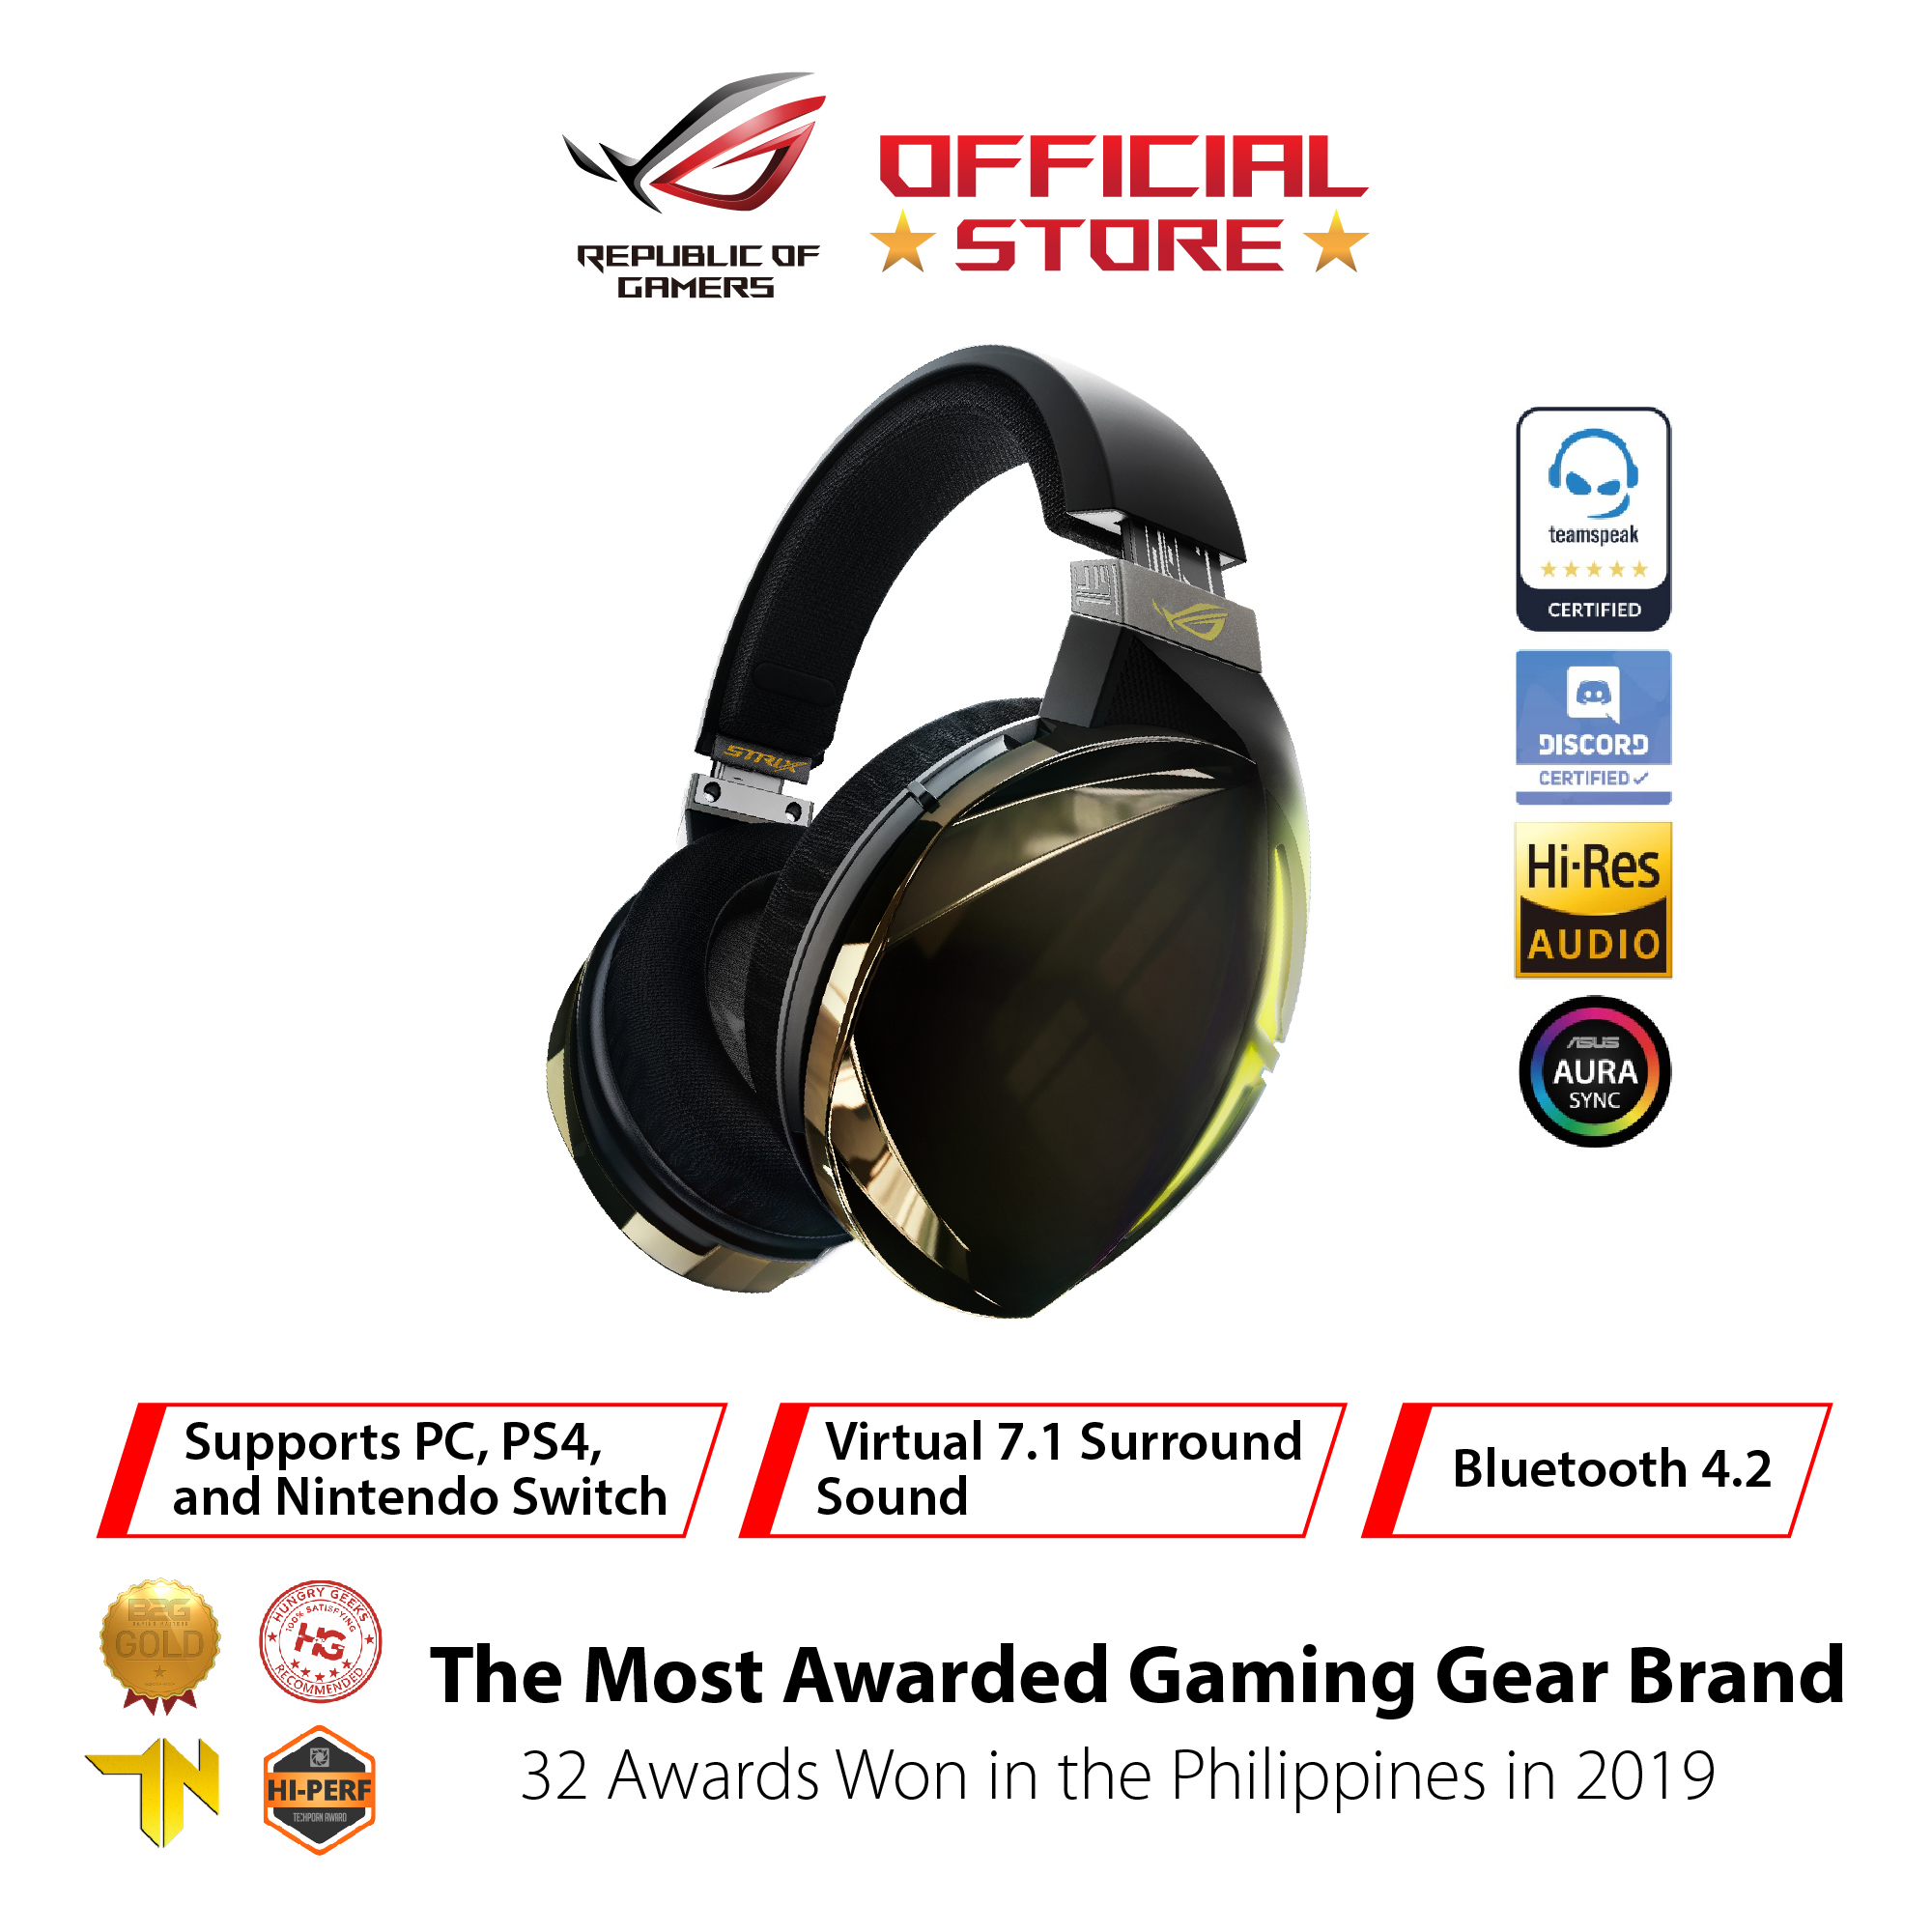 Buy Asus Republic Of Gamers Gaming Headsets Online Lazada Com Ph